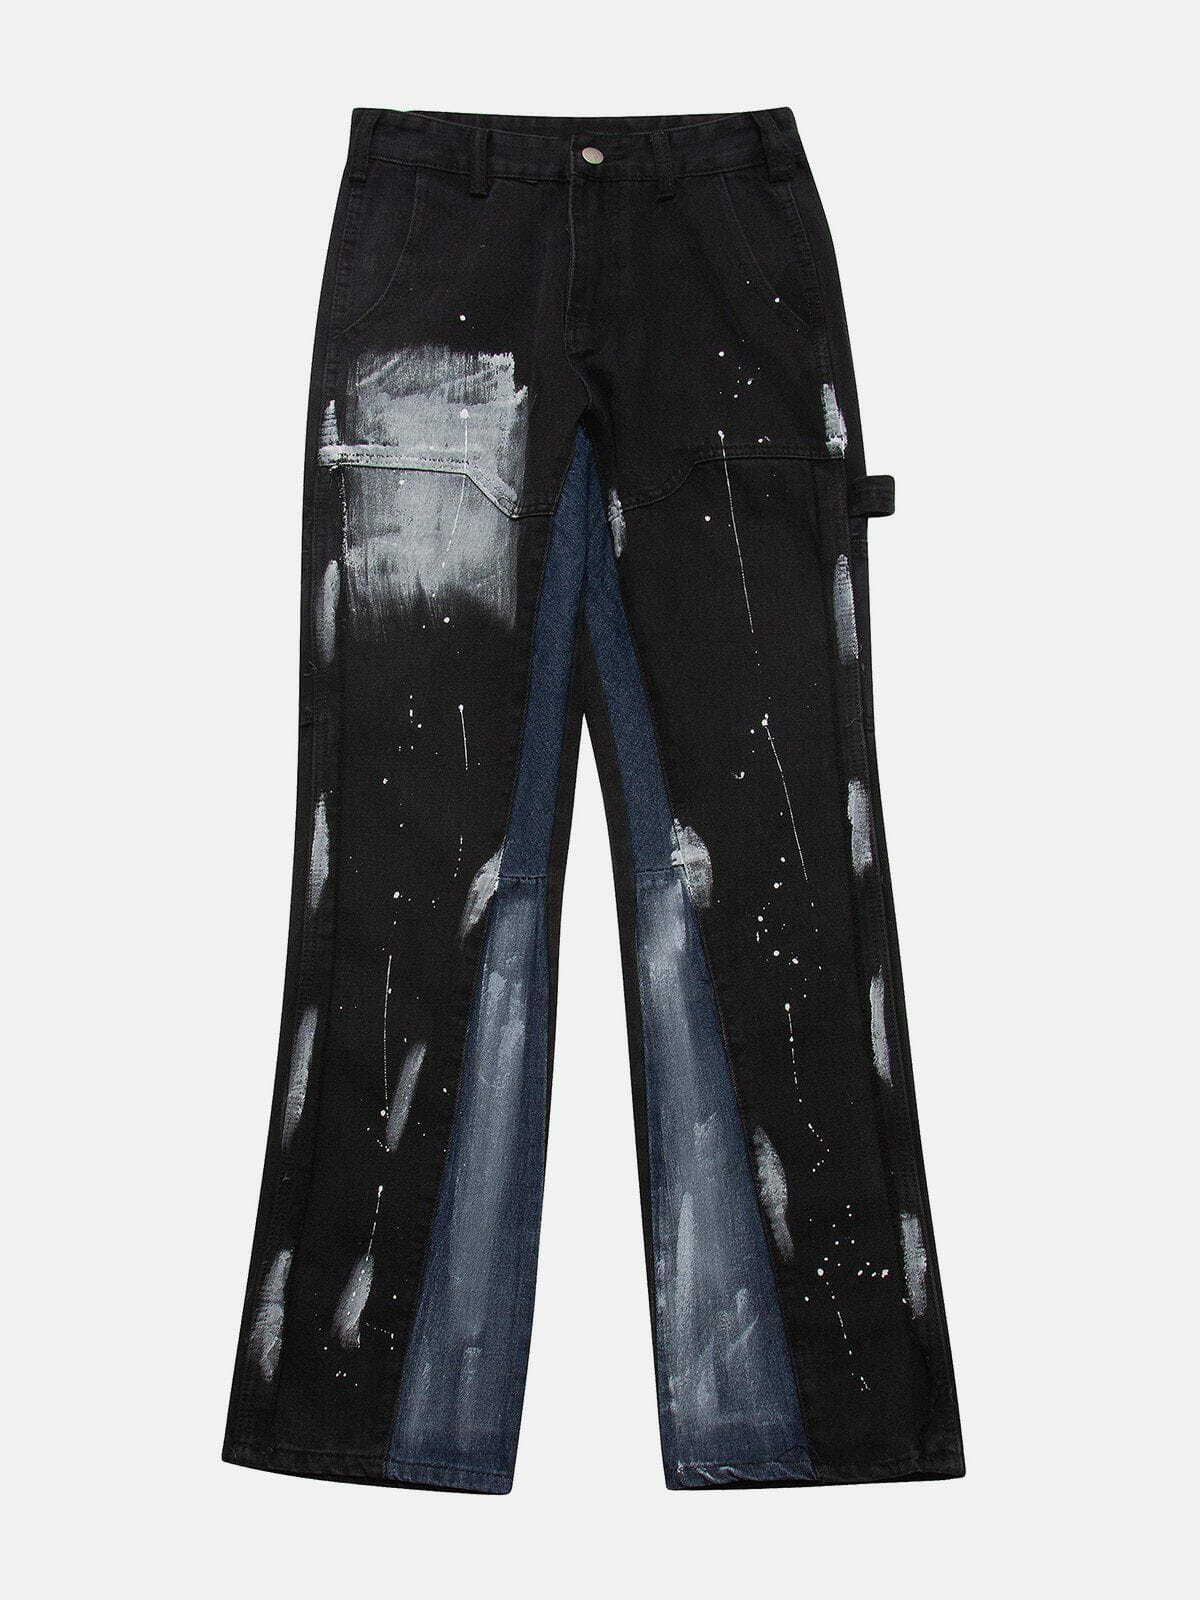 dynamic patchwork jeans edgy & vibrant streetwear 3083